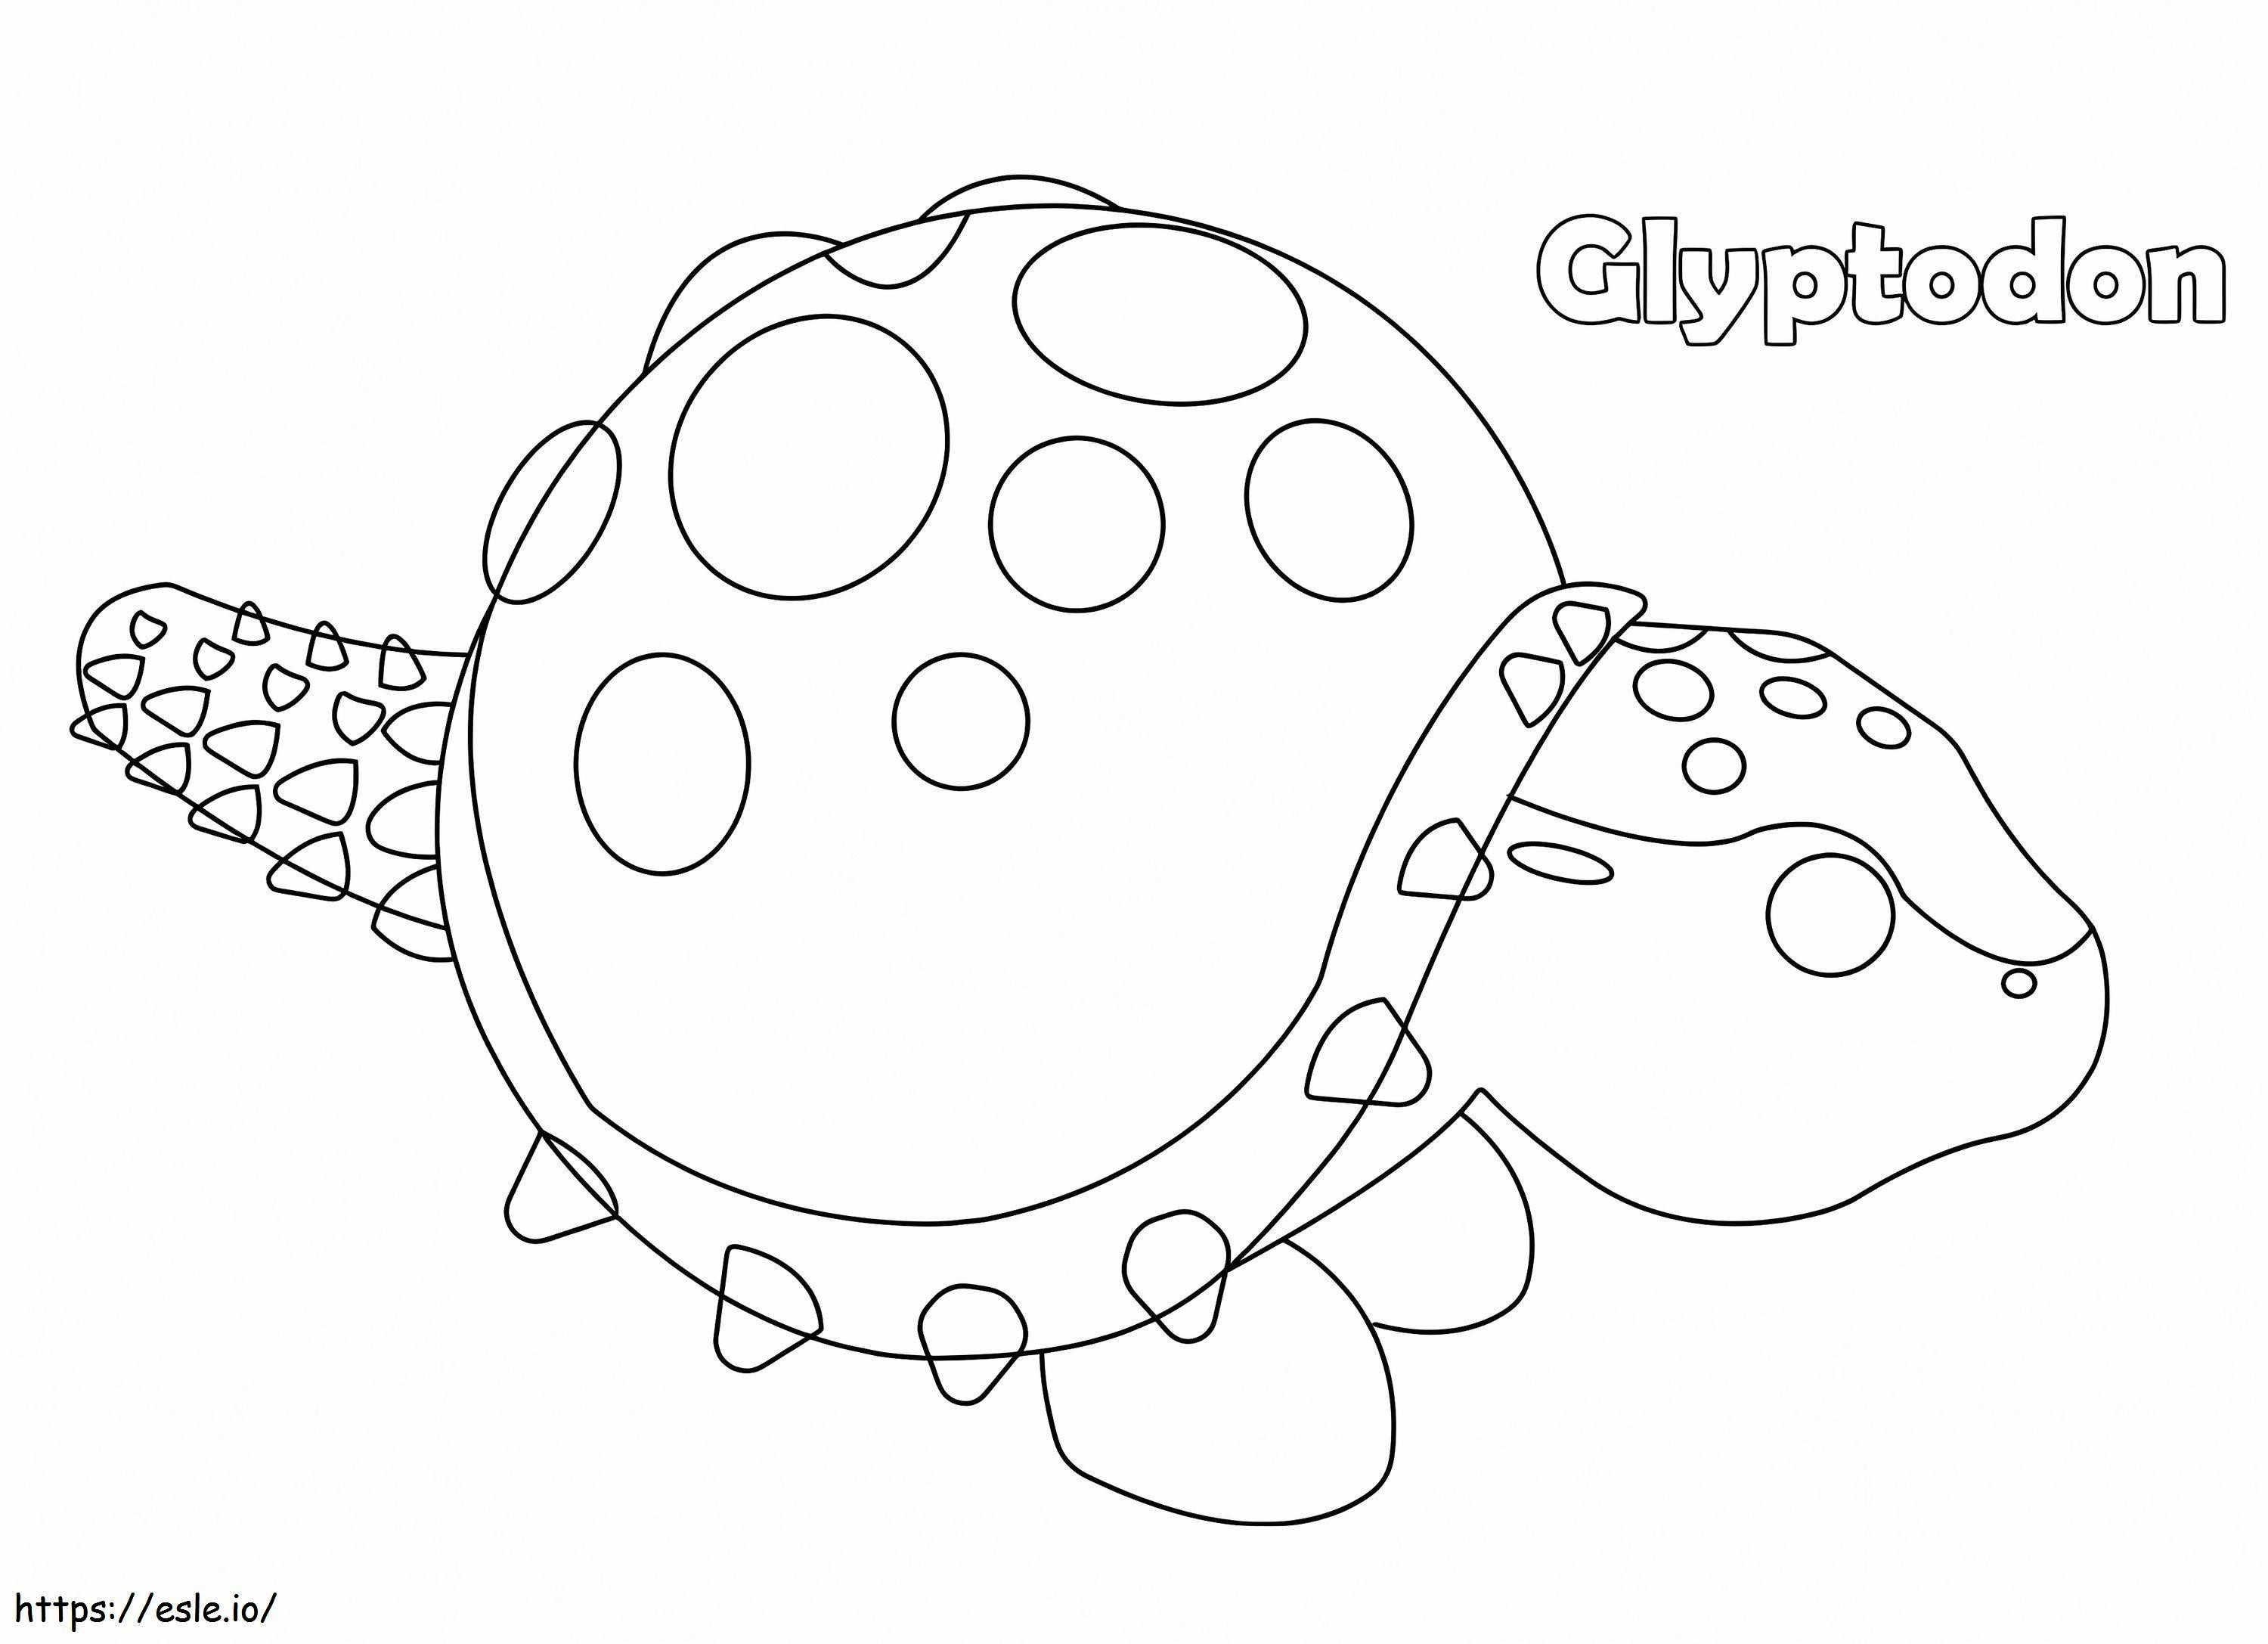 Glyptodon Adopt Me coloring page